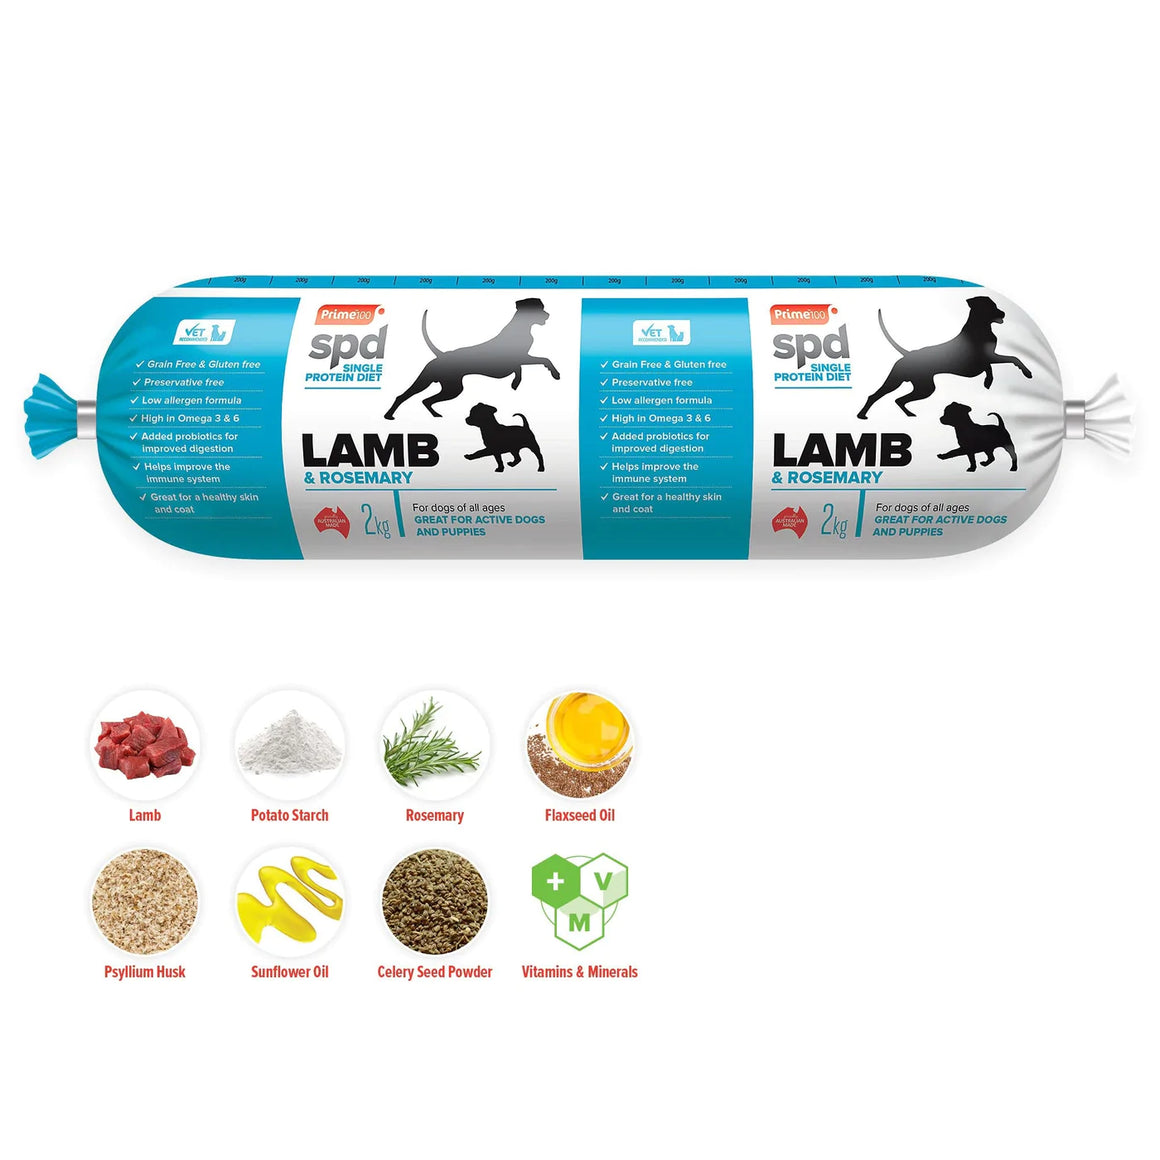 Prime100 SPD* Lamb & Rosemary rolls profile | Pet Food Leaders